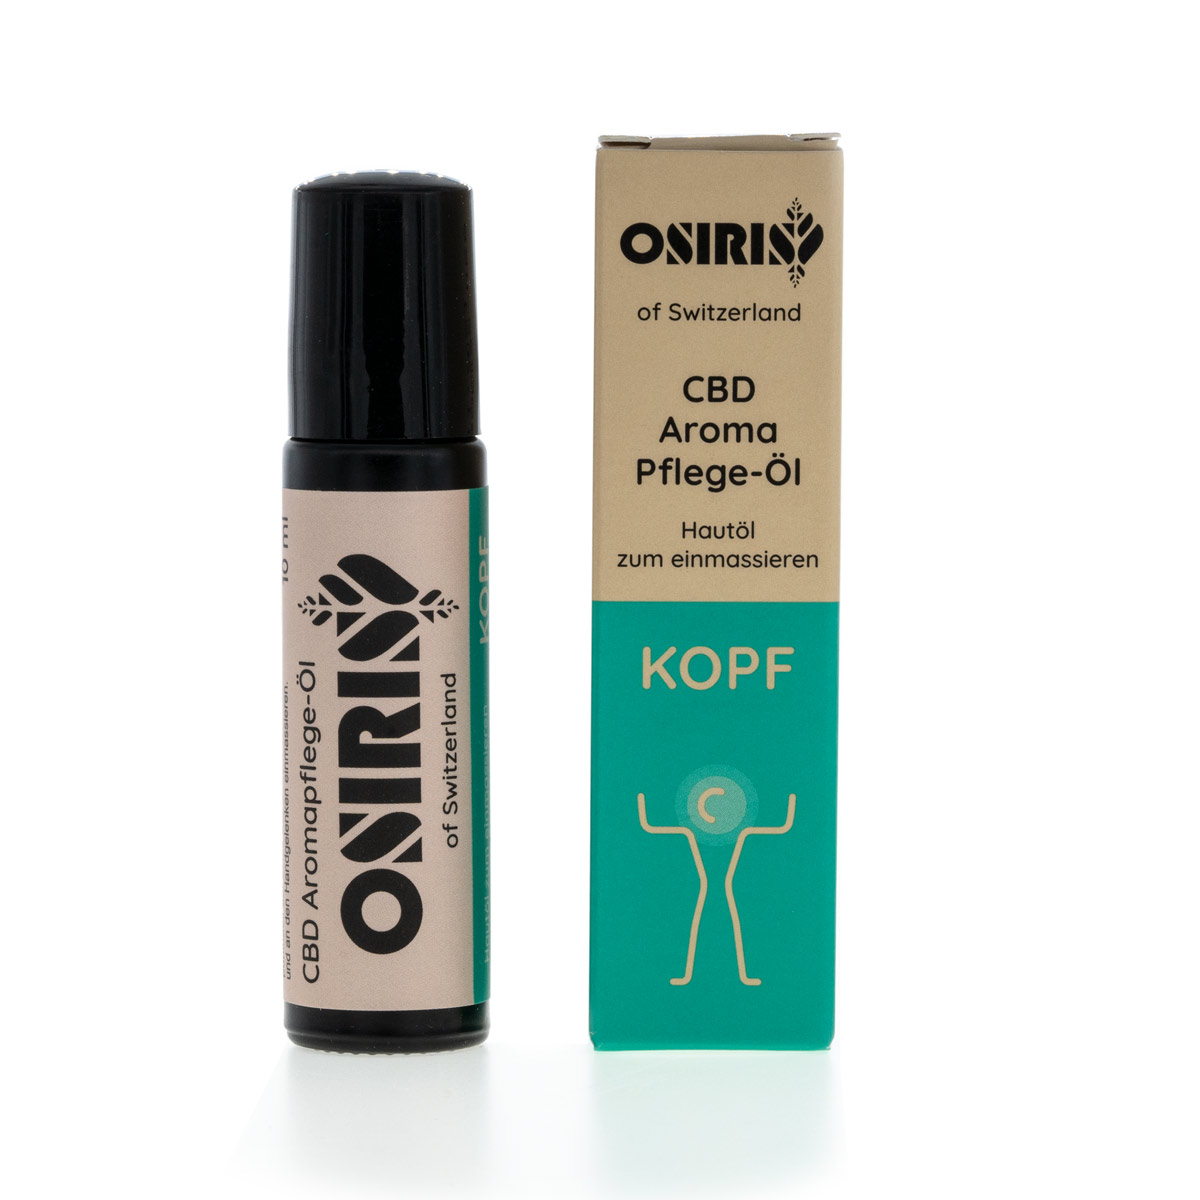 Osiris Kopf 10ml CBD Aroma Pflege Öl